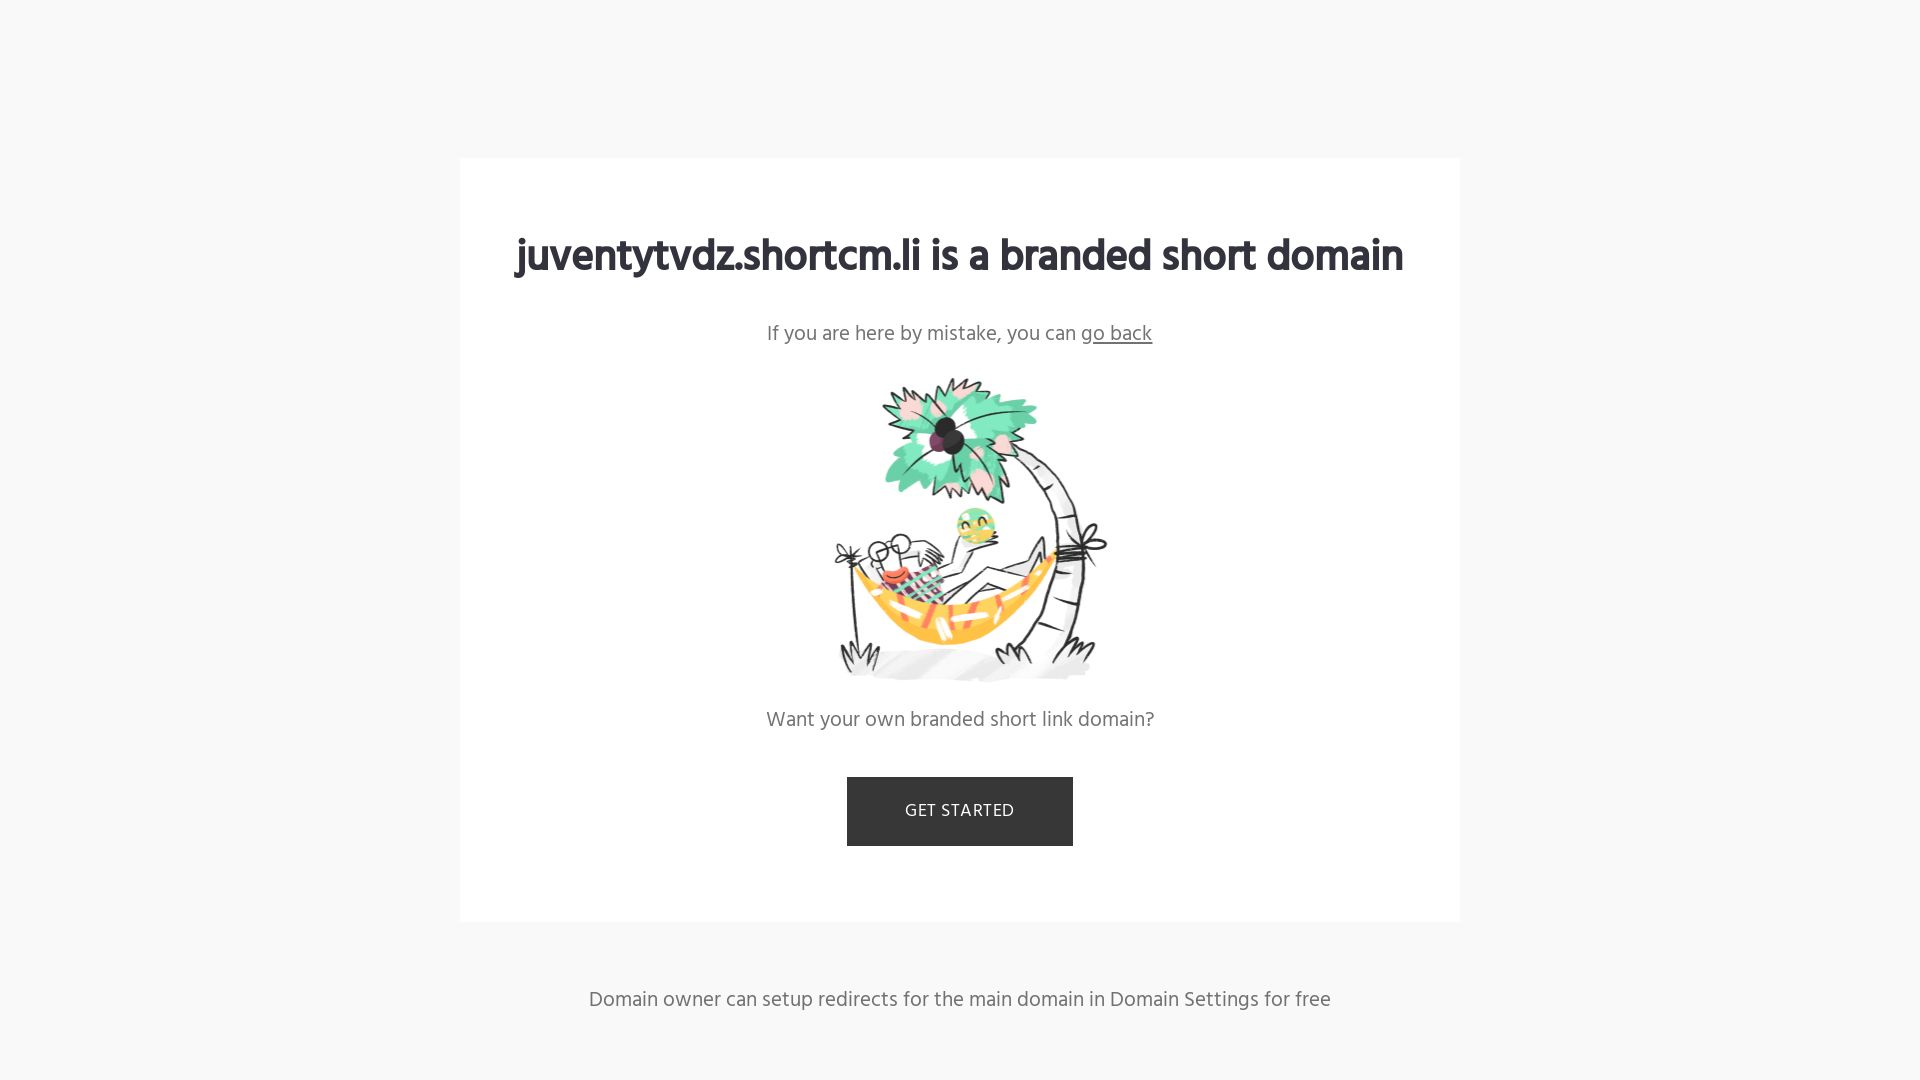 Stato del sito web juventytvdz.shortcm.li è   ONLINE